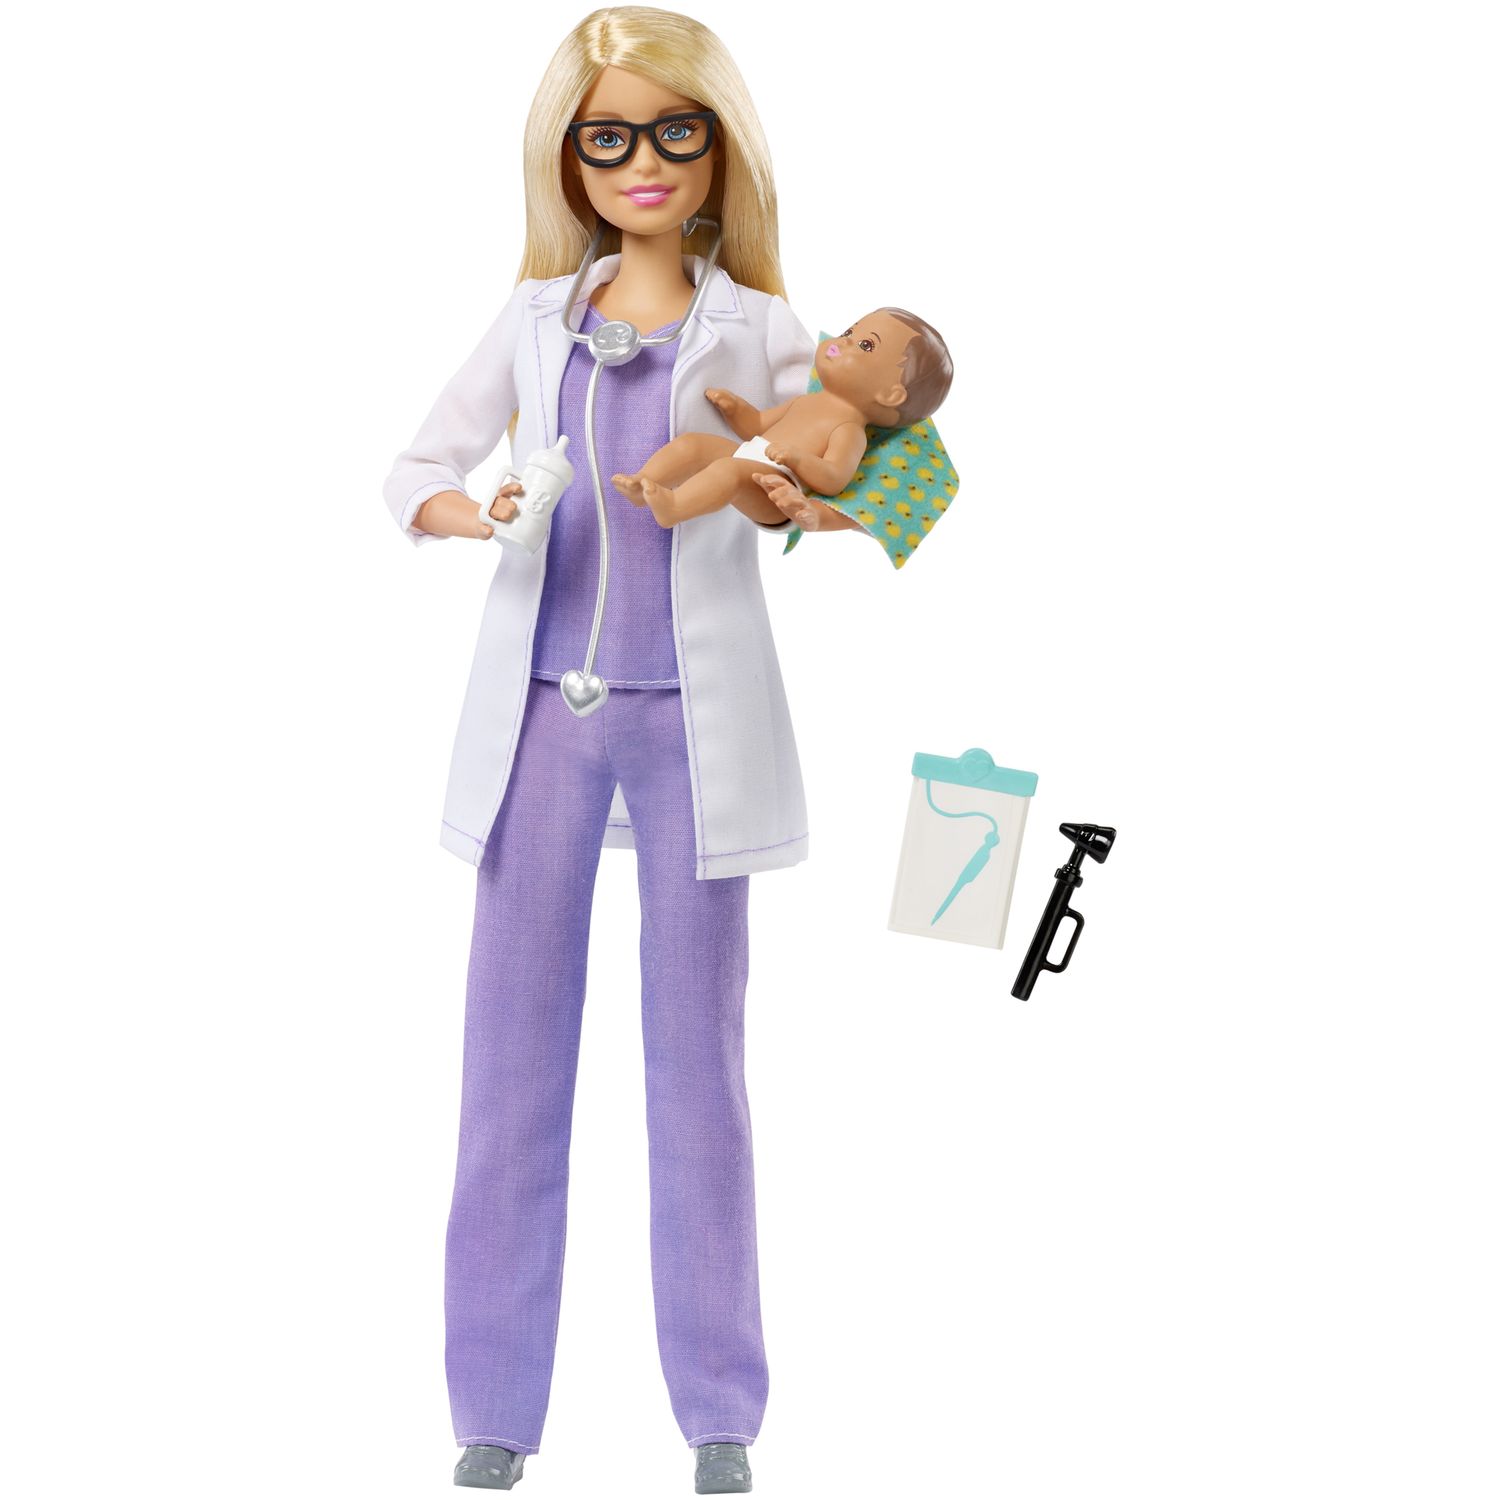 barbie careers baby doctor doll playset